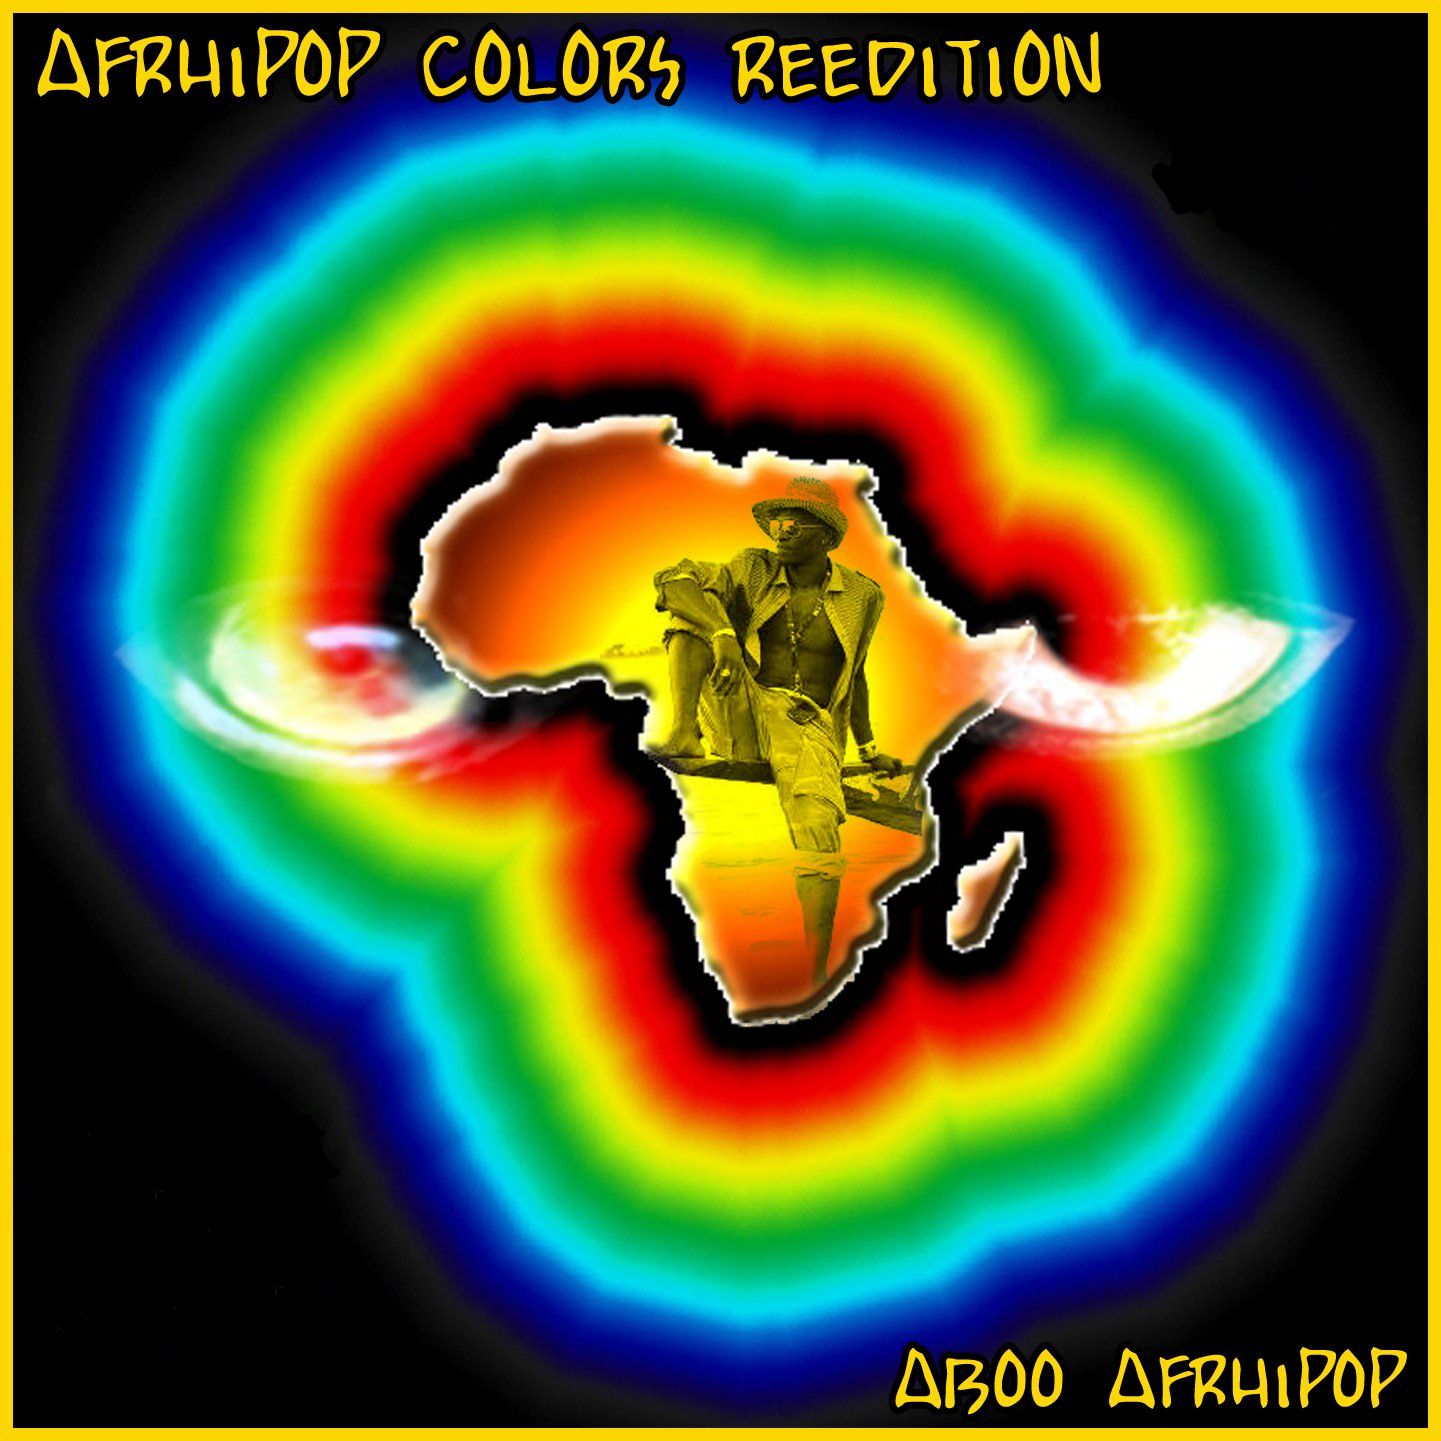 Visuel cover Album Afrhipop Colors de l'Artiste Aboo AfrHipoP